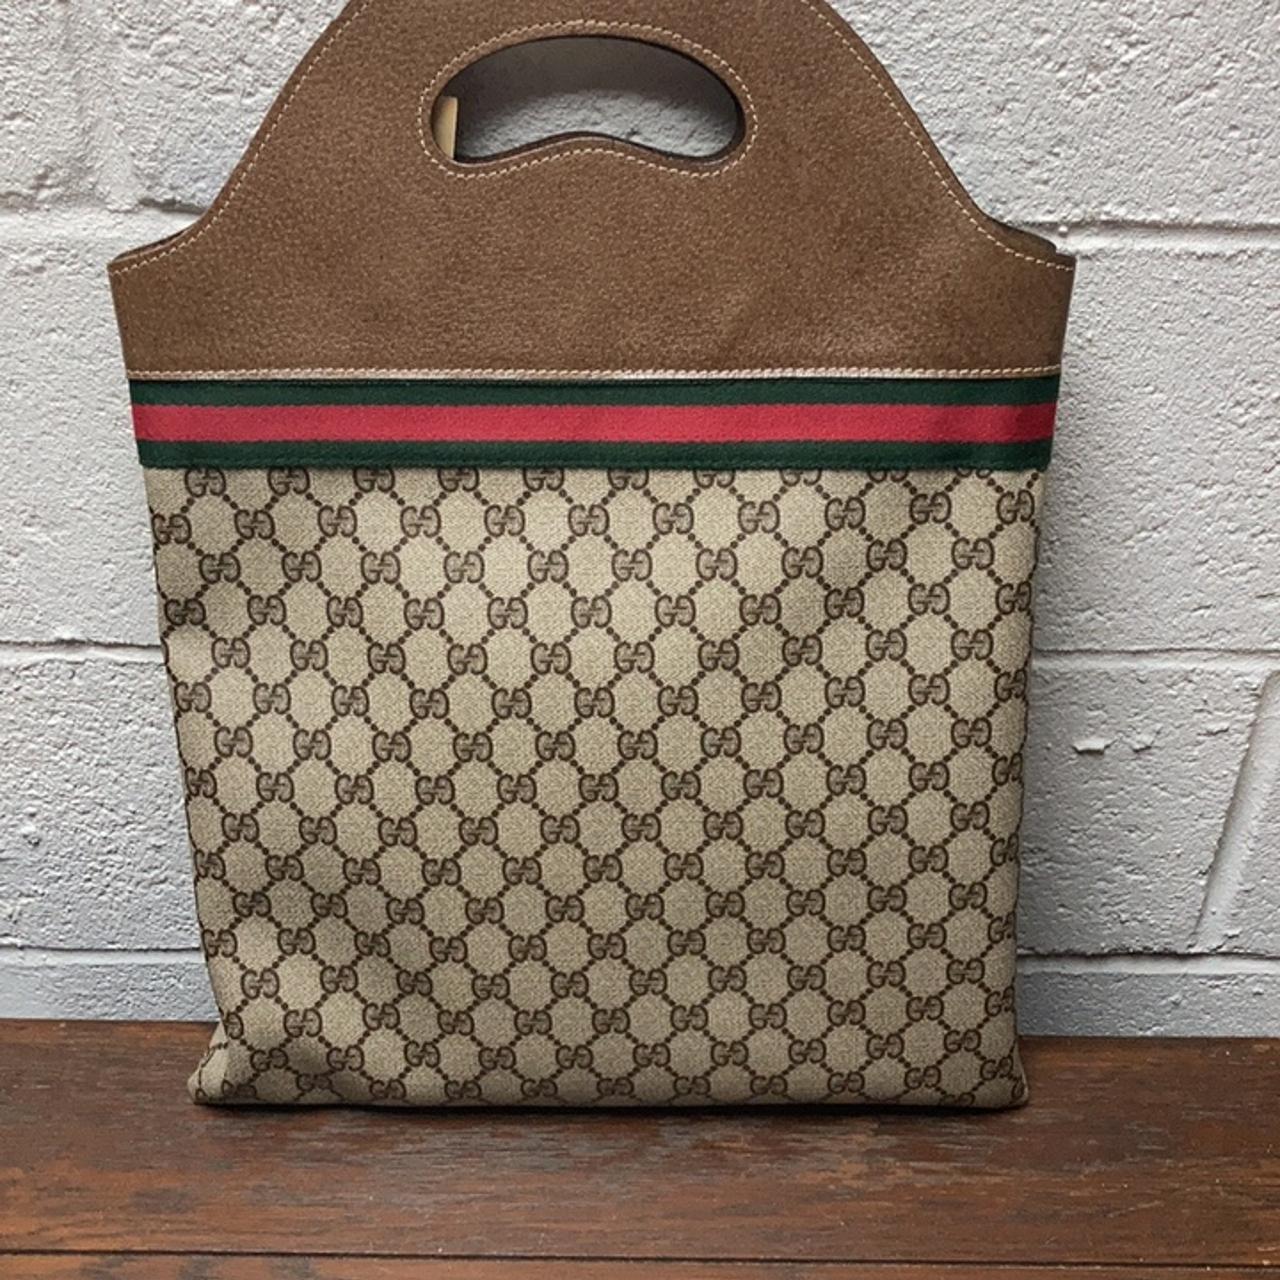 Vintage 1970s / 1980s Gucci Speedy Bag Length - Depop